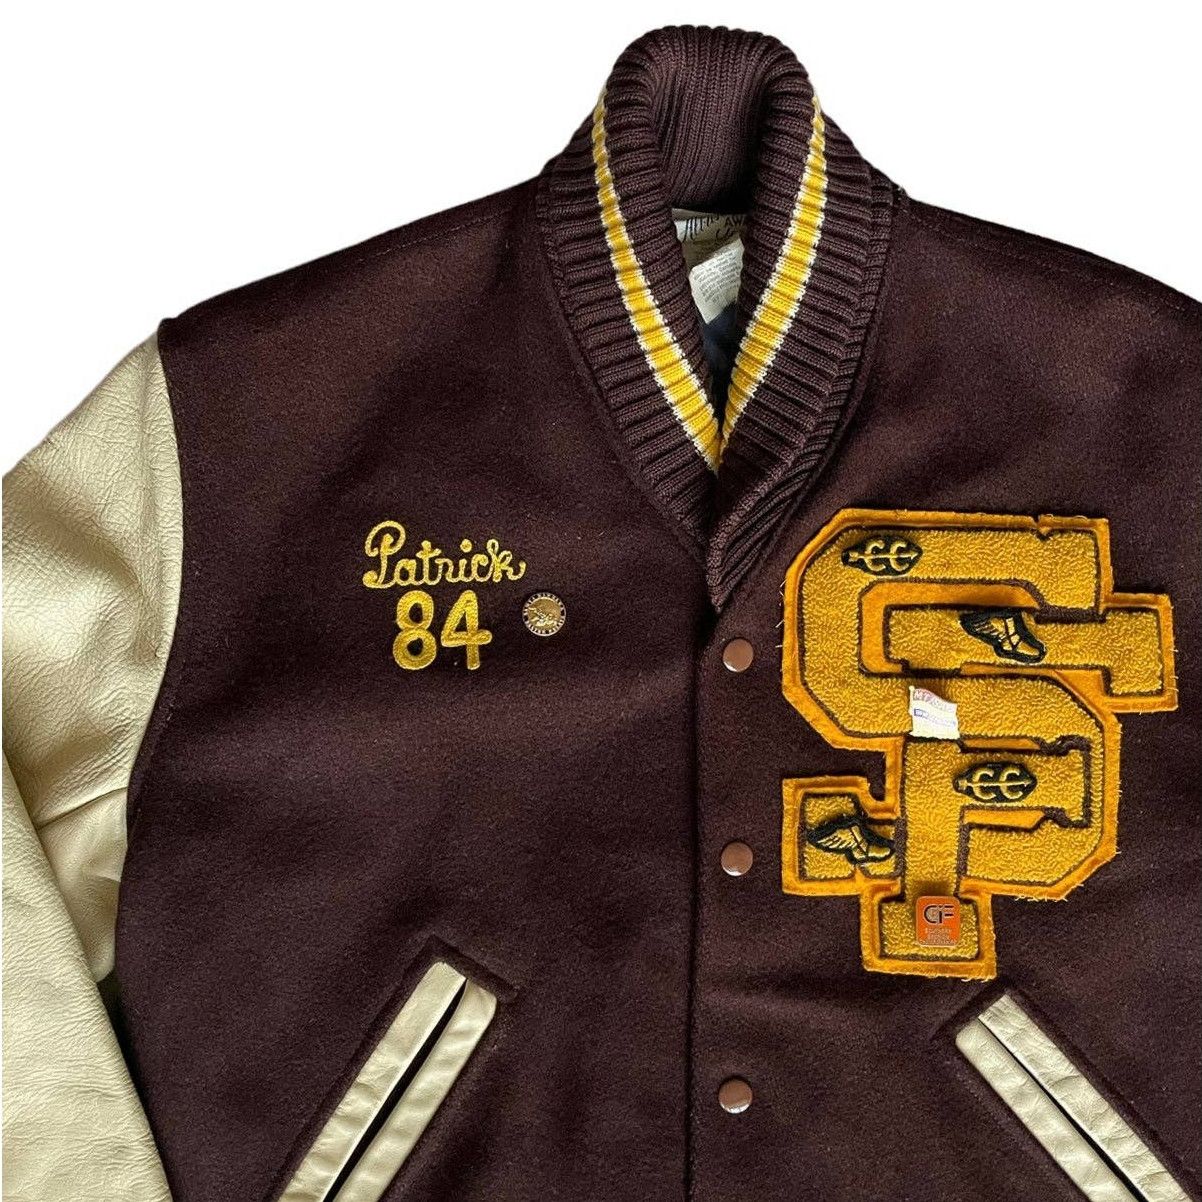 Vintage VTG 1984 San Francisco Track & Field Varsity Jacket Size L Size US L / EU 52-54 / 3 - 2 Preview